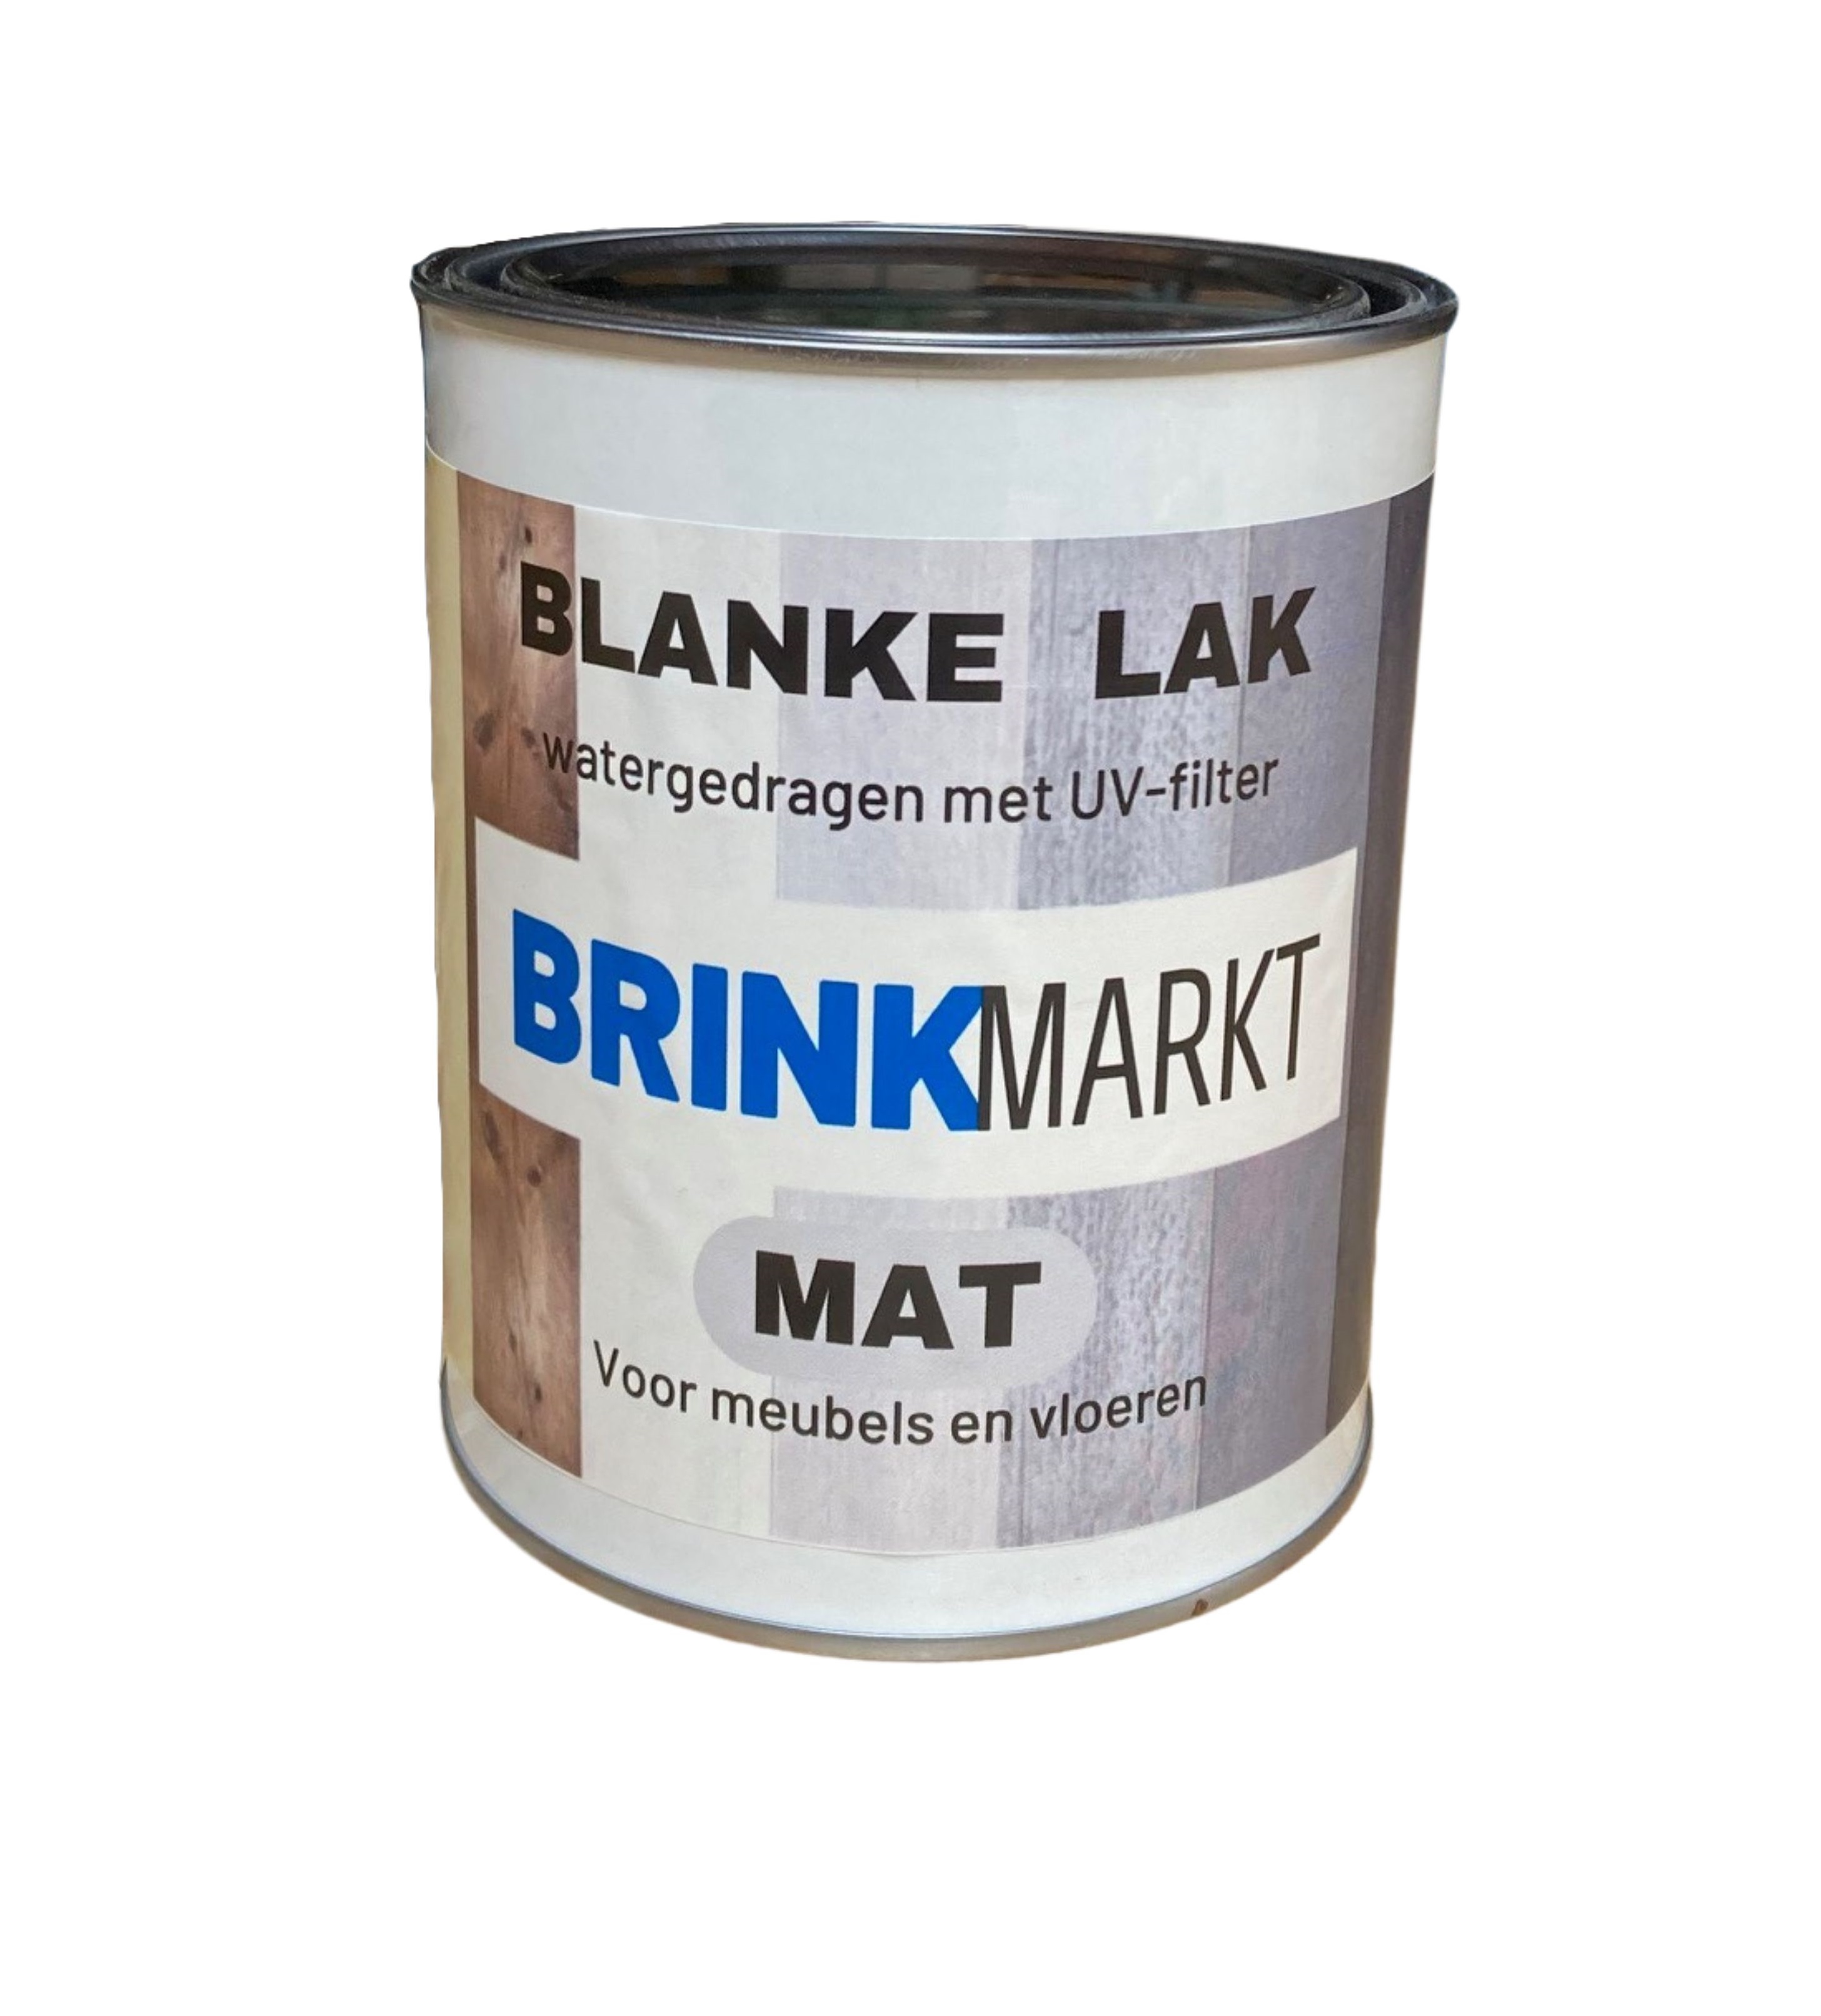 BM Blanke lak mat 2-componenten water gedragen 2,5 | BRINKmarkt.nl